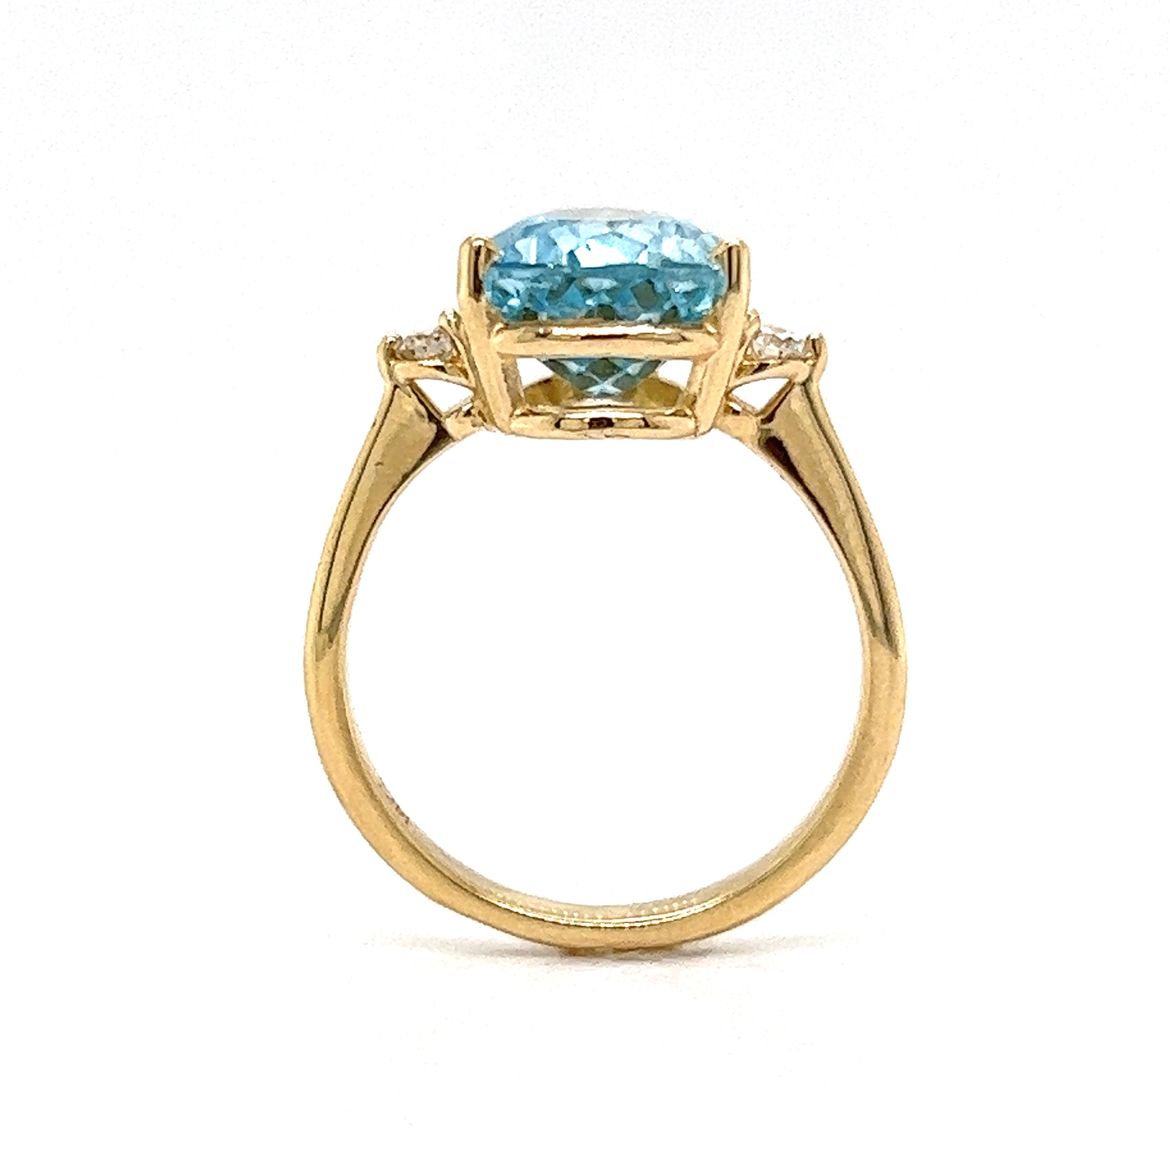 3.72 Carat Aquamarine Engagement Ring in 14k Yellow Gold